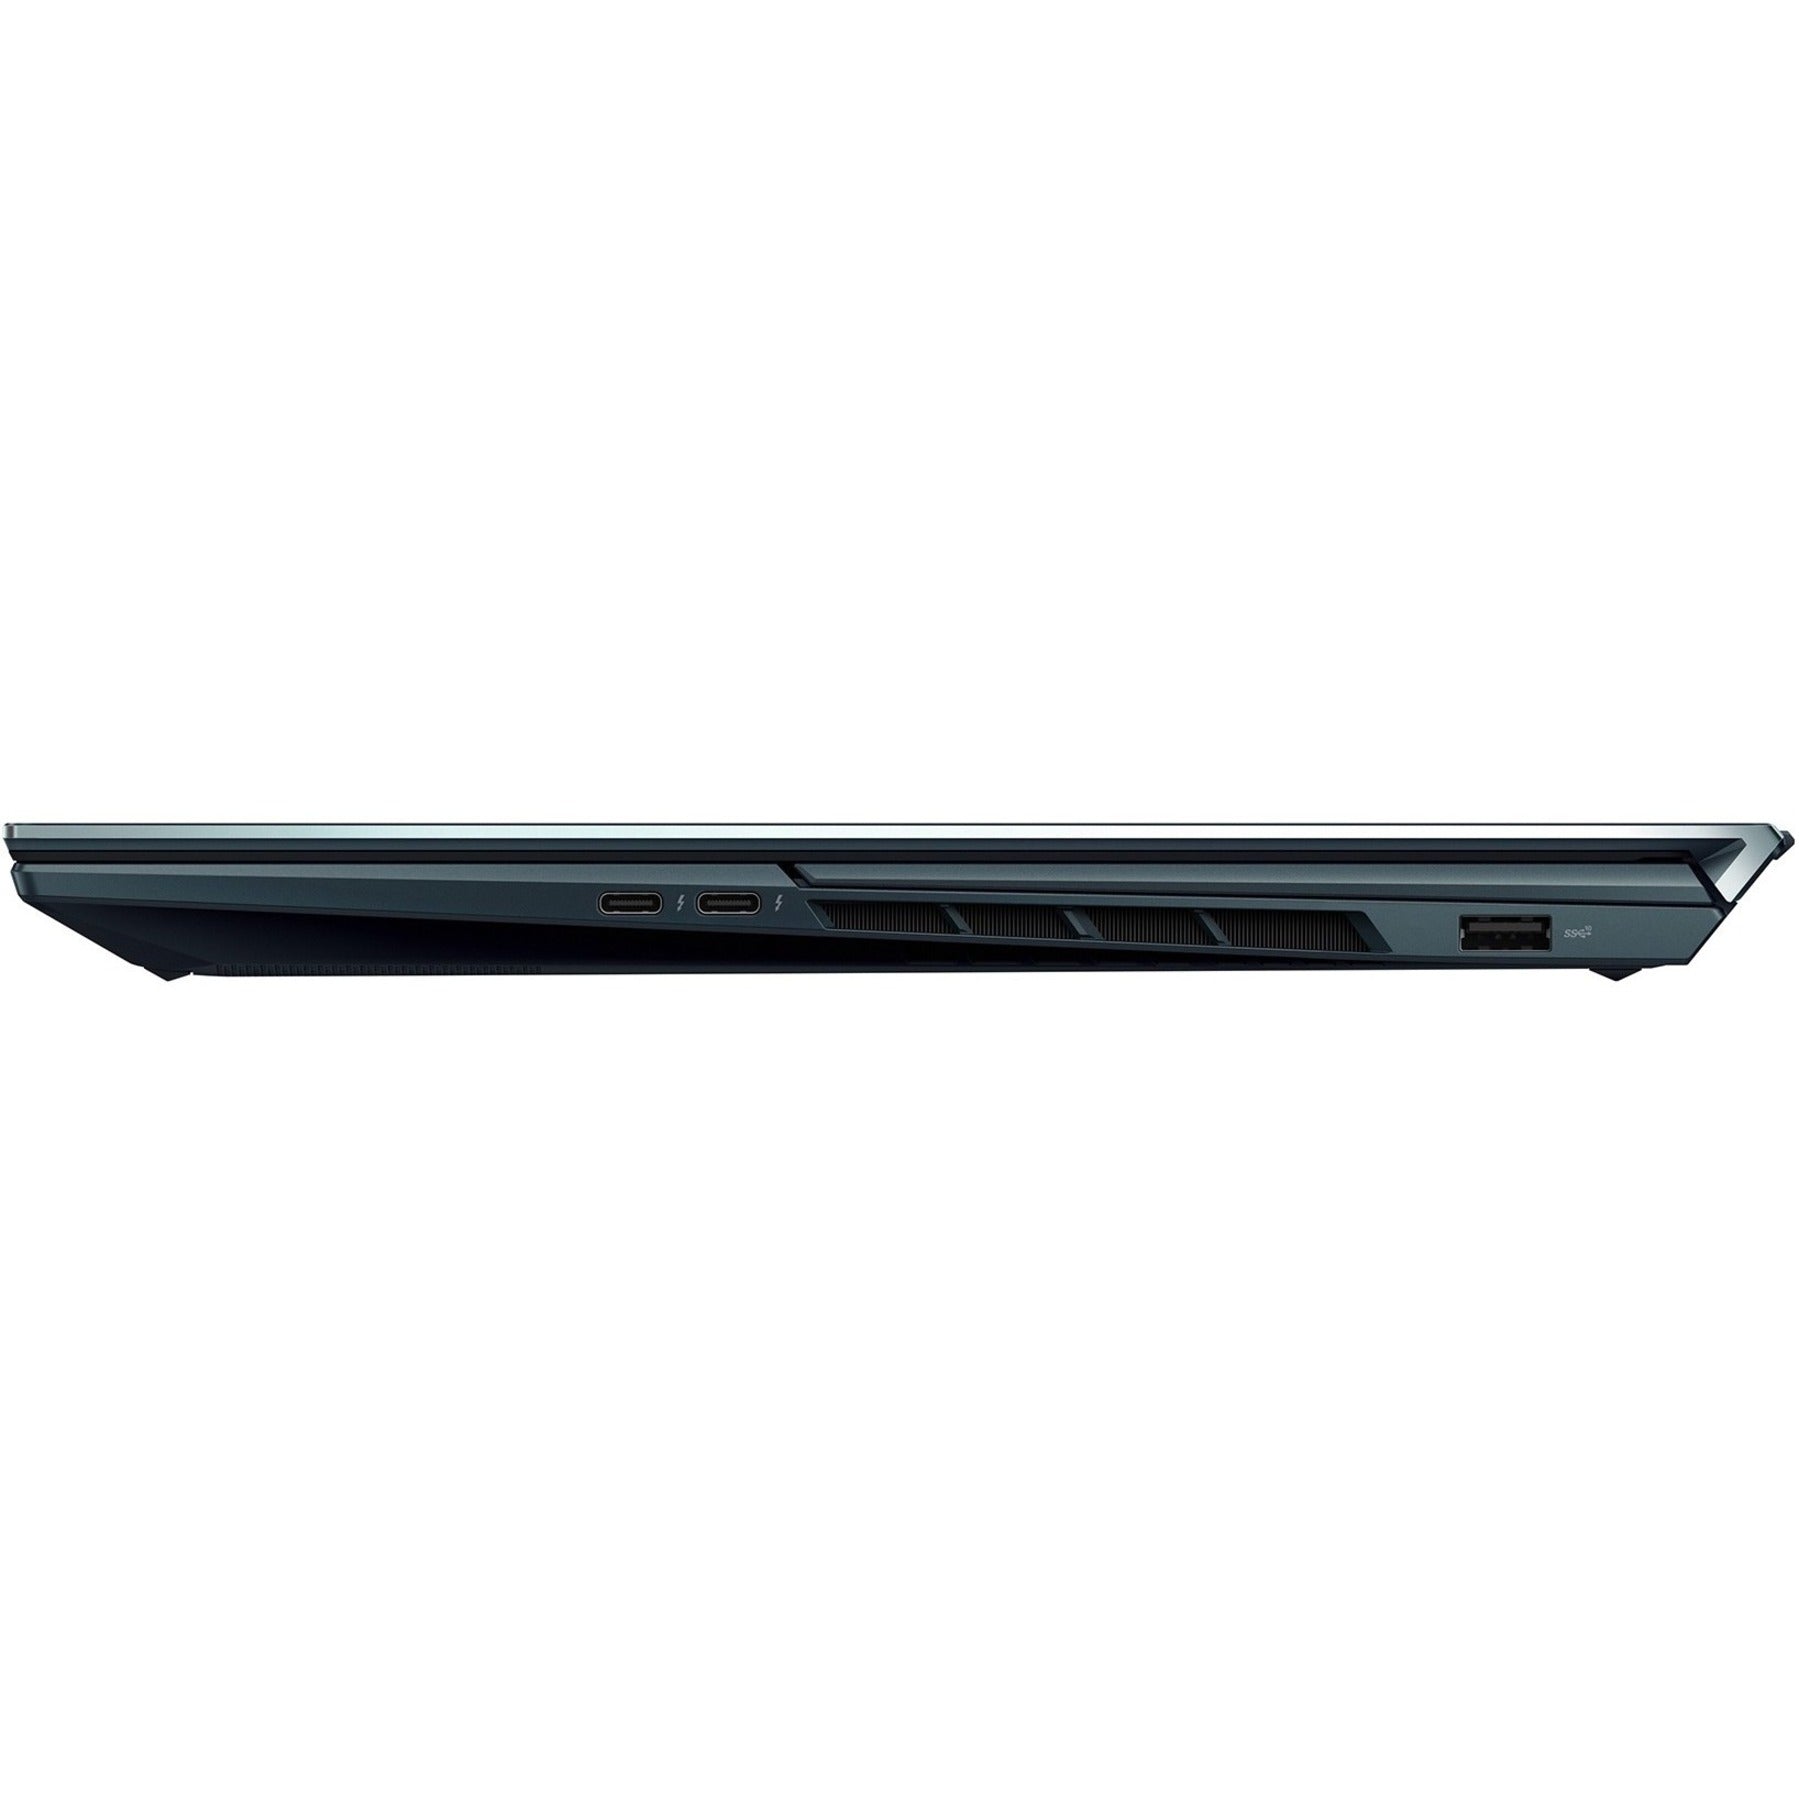 Asus UX582HM-XH96T ZenBook Pro Duo 15 Notebook, 4K UHD Touchscreen, Intel Core i9, 32GB RAM, 1TB SSD, Celestial Blue